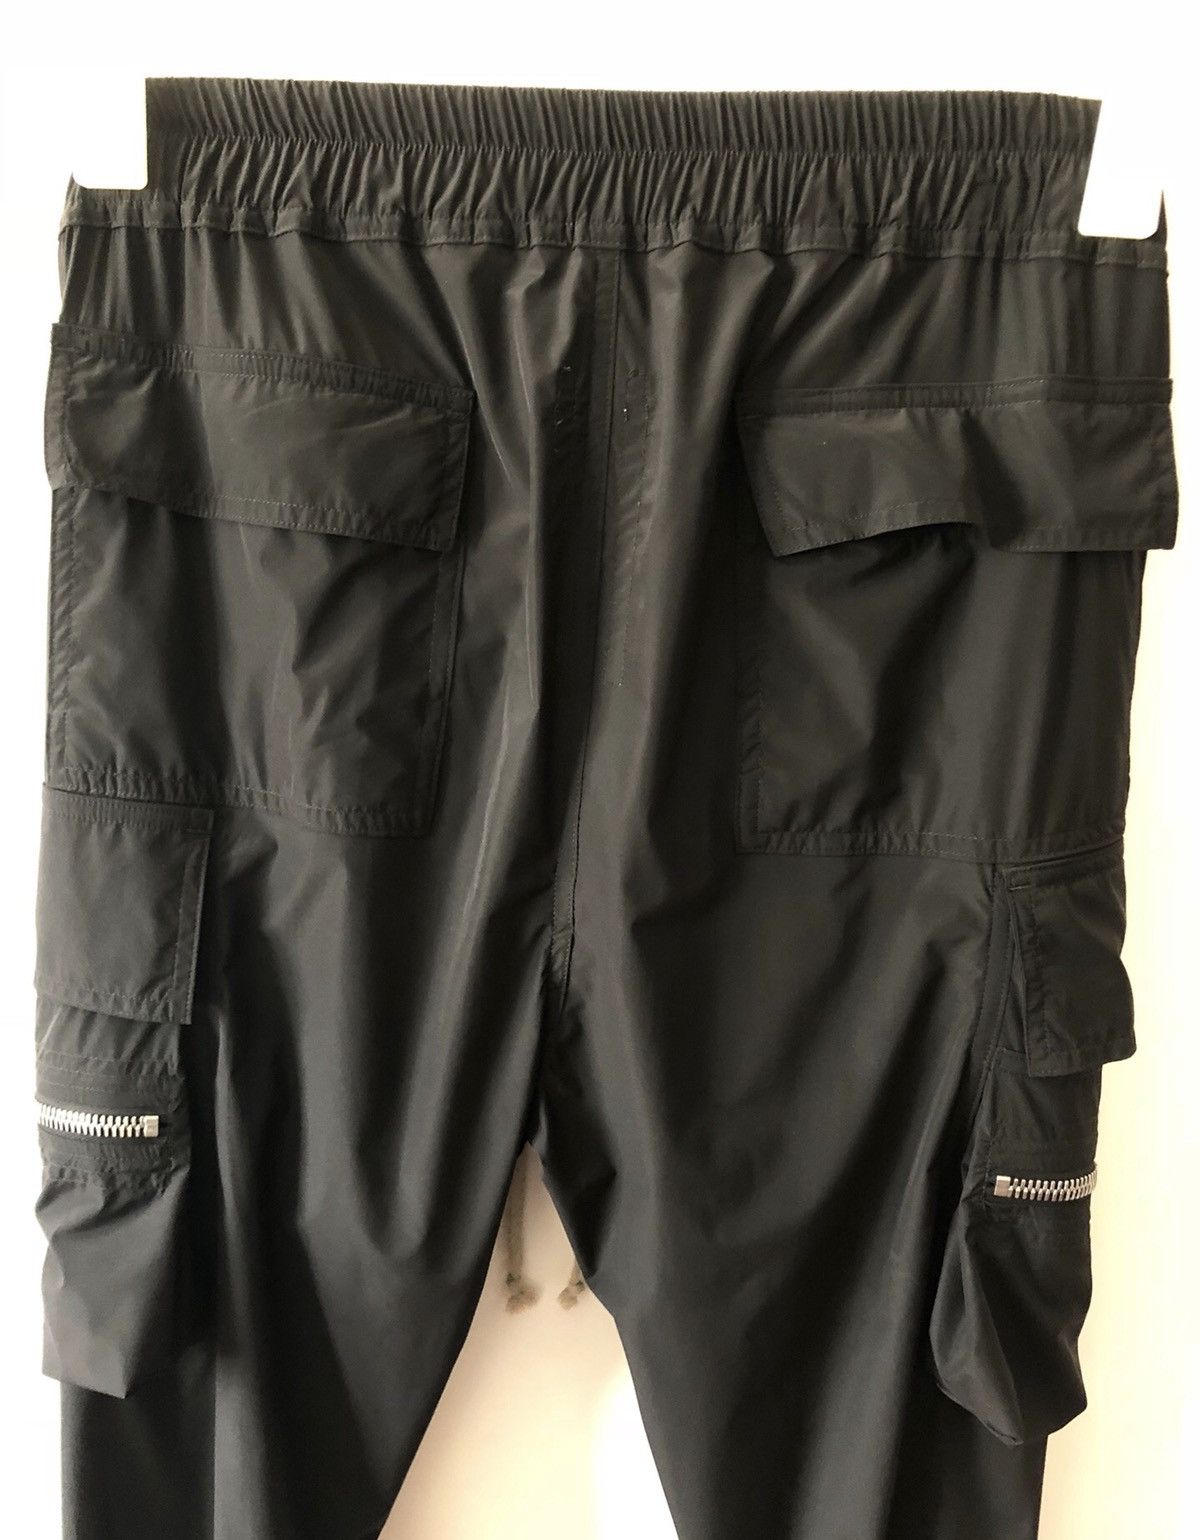 Rick Owens 18ss Men's Black Nylon Drawstring Cargo Joggers Pants Size US 32 / EU 48 - 2 Preview